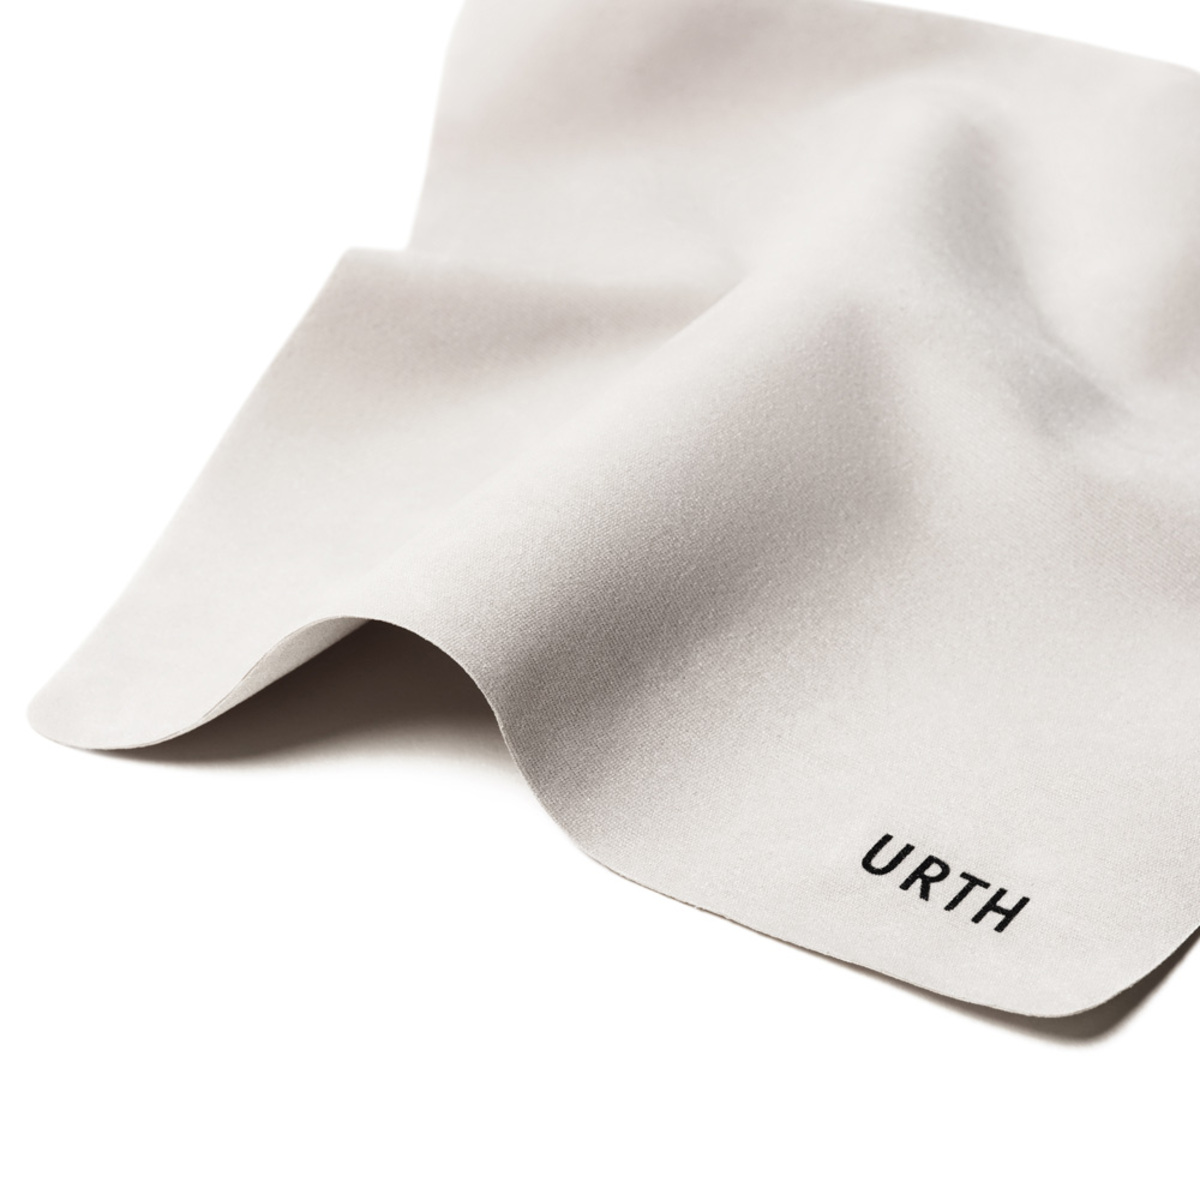 Urth 40.5mm Ethereal ⅛ Black Mist Objektivfilter (Plus+)